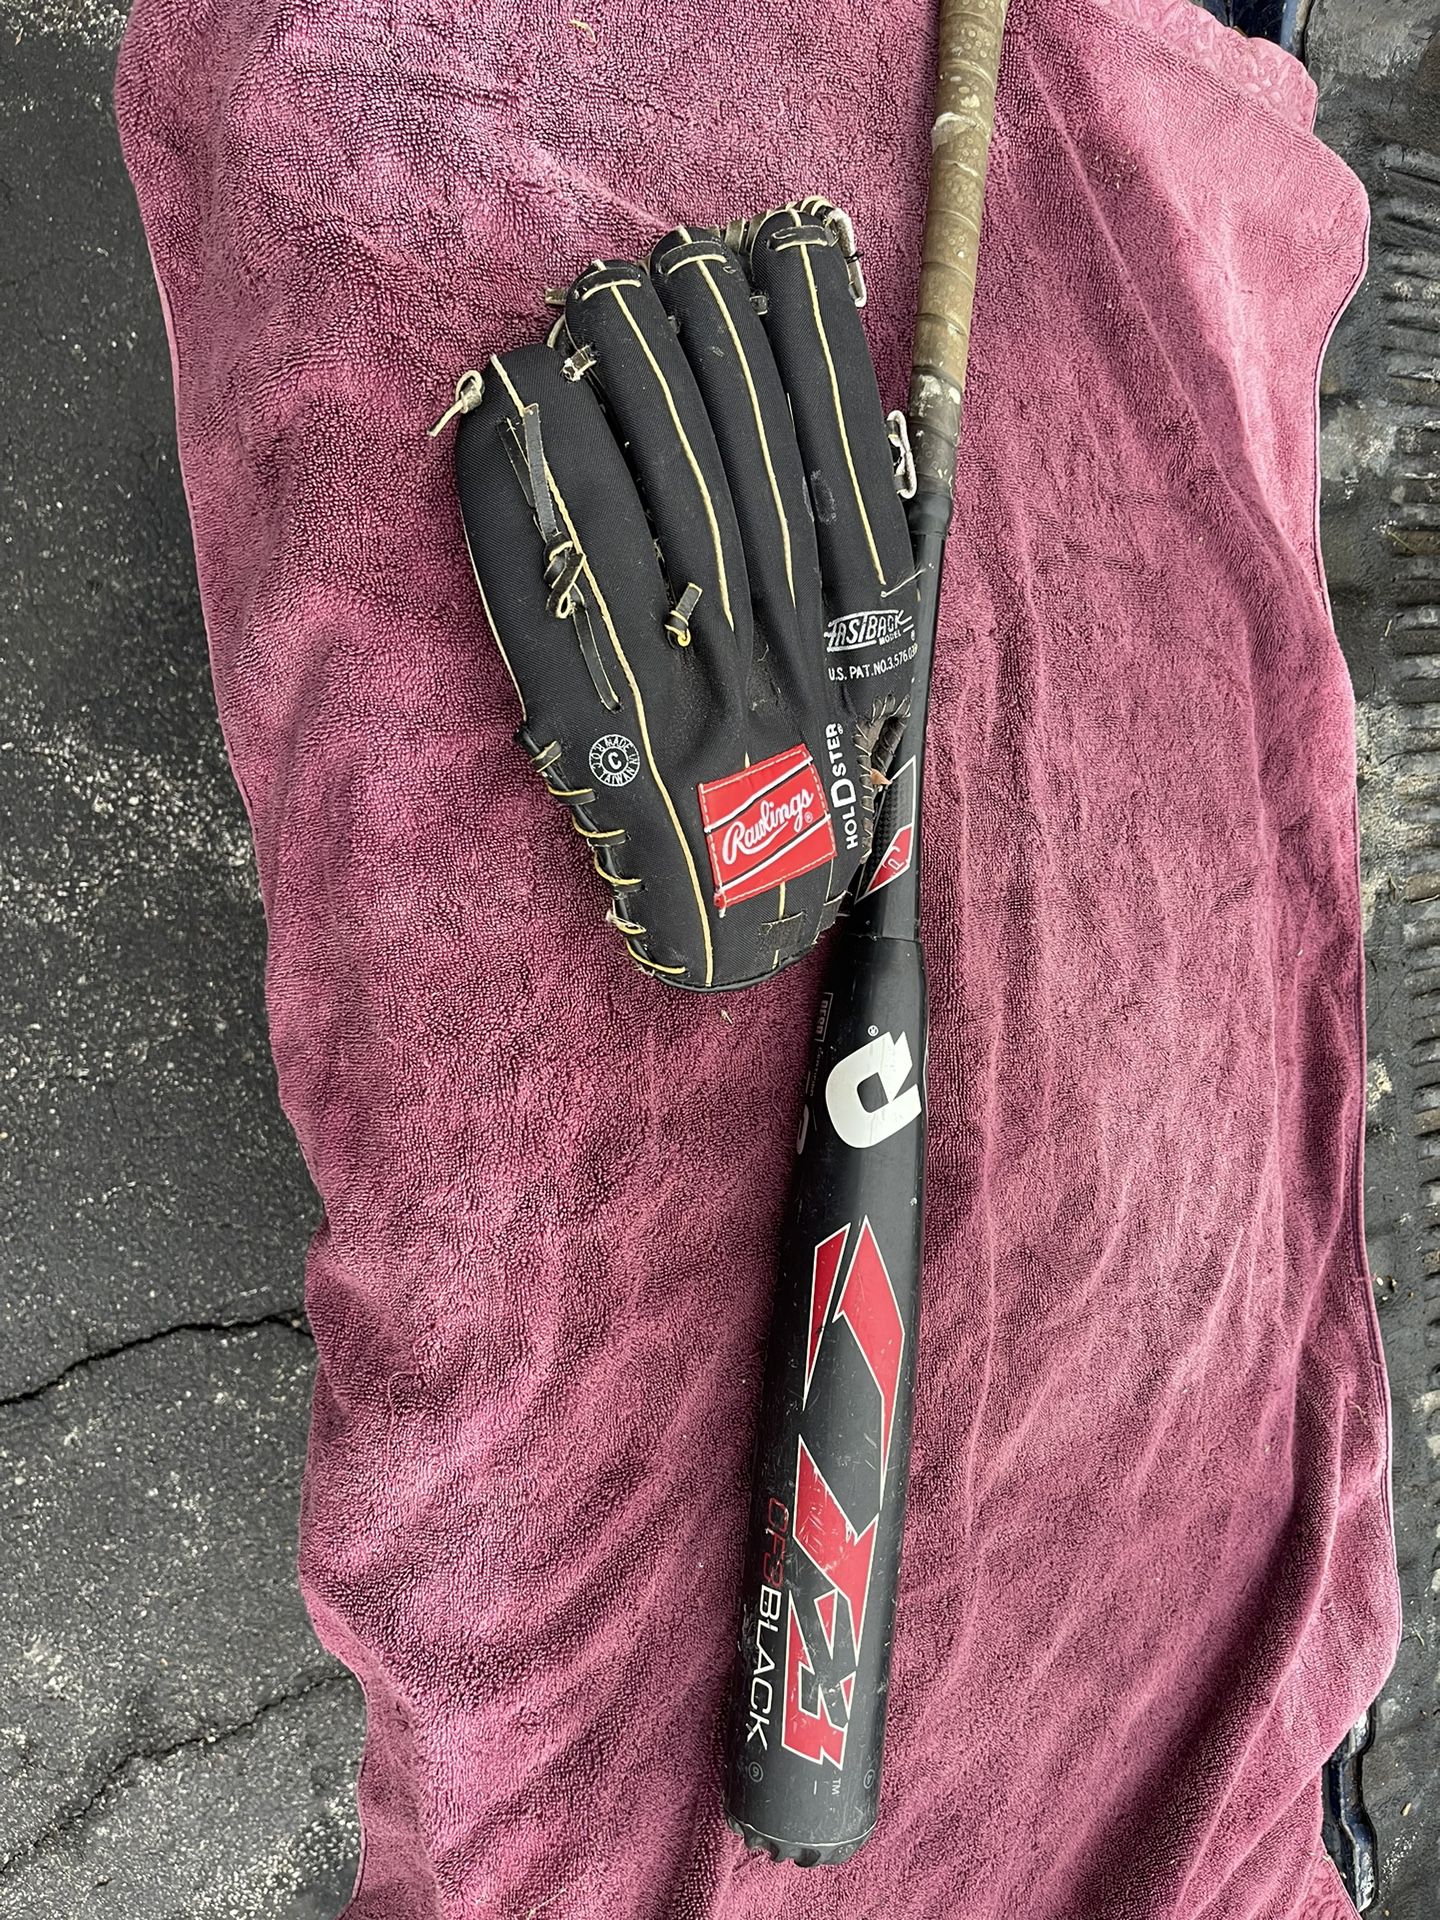 Dimarini Baseball Bat And Glove $175